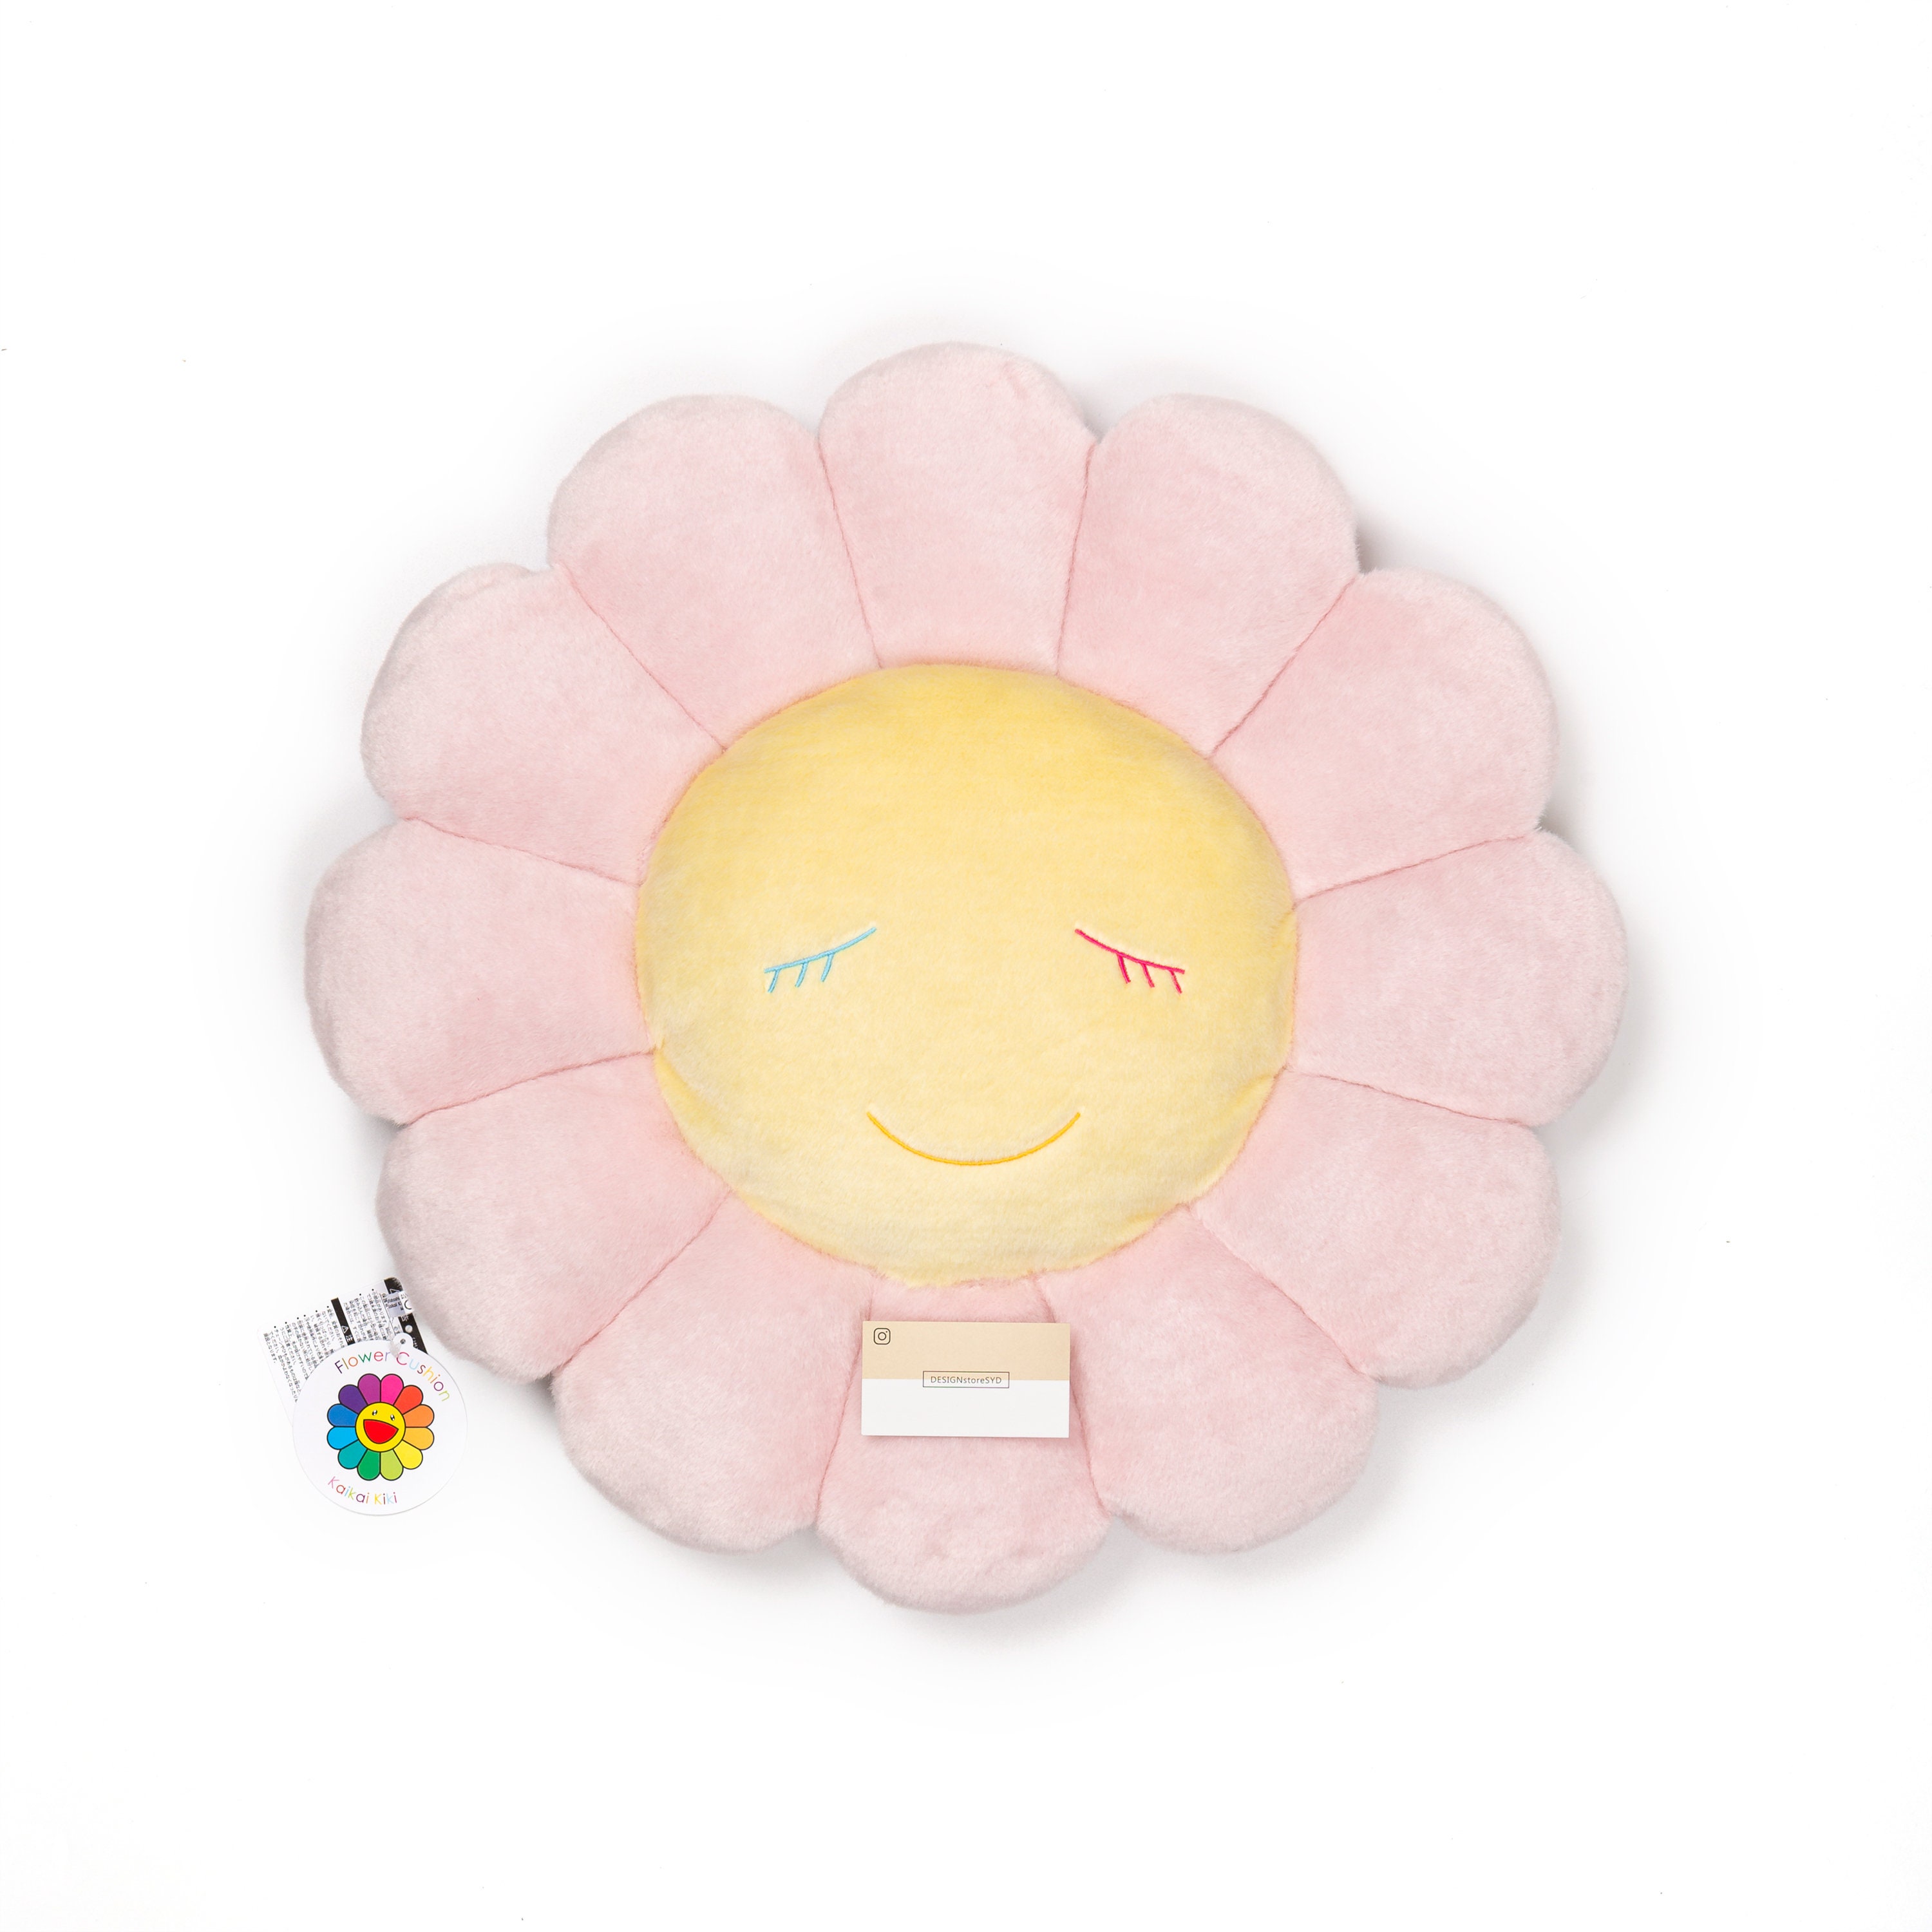 Authentic TAKASHI MURAKAMI Rainbow Flower pillow 60cm pink | Etsy